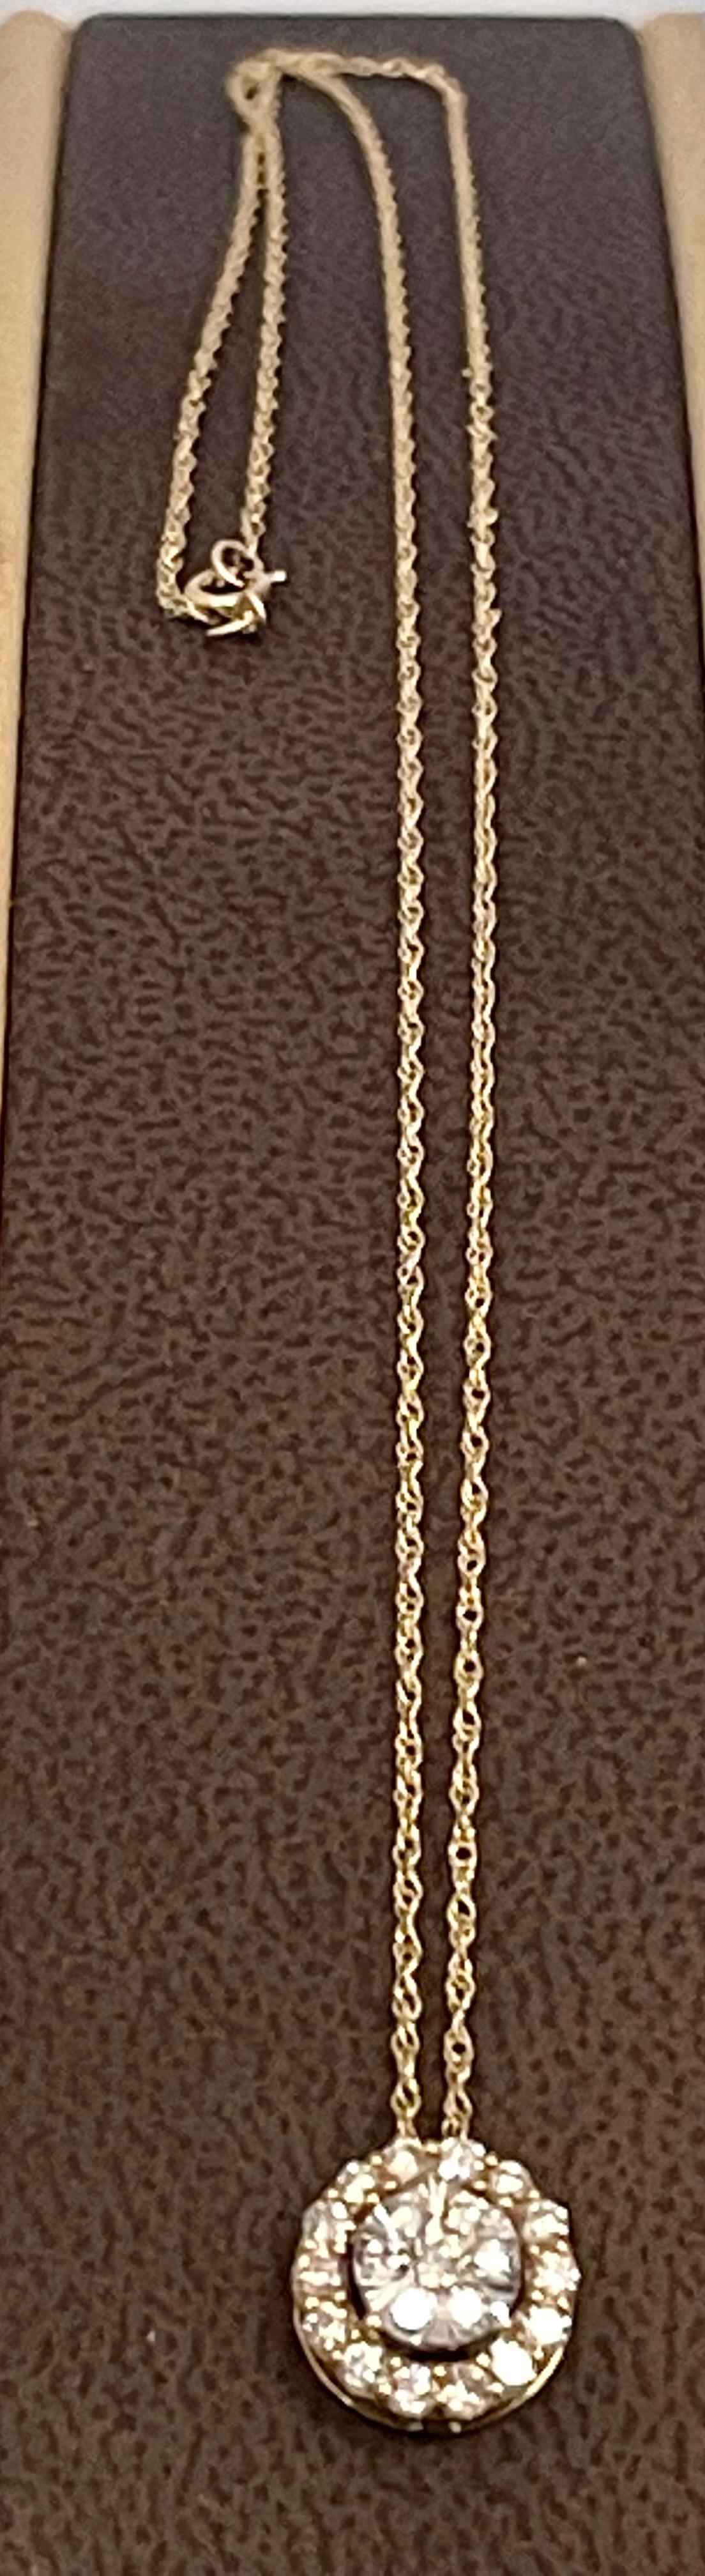 1 Carat Diamond Flower Pendant/ Necklace 14 Karat Yellow Gold with Chain 1